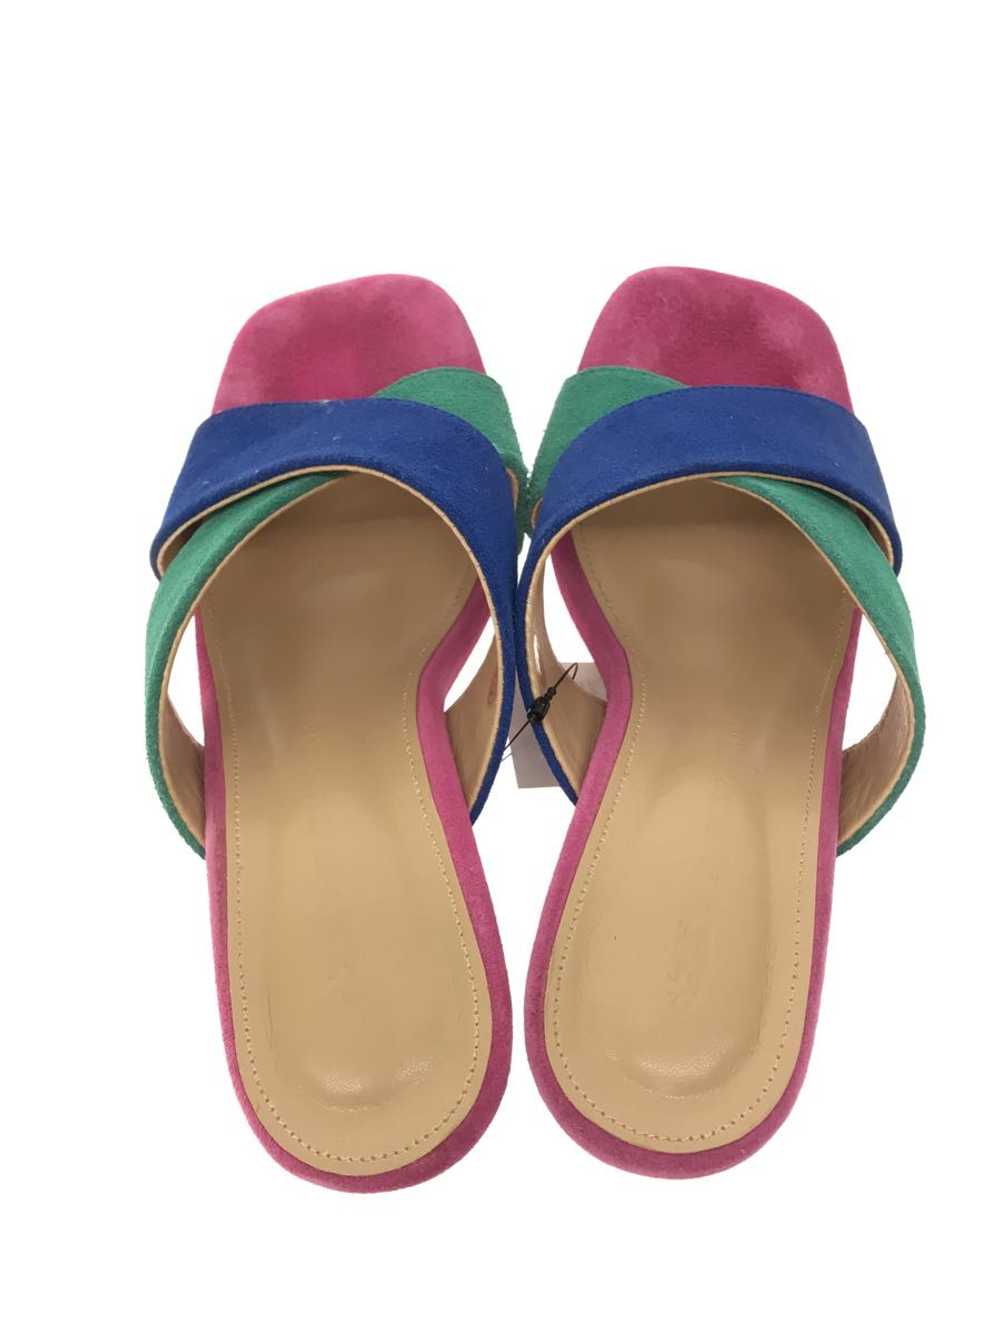 Grace Continental Sandals Shoes BfU52 - image 4